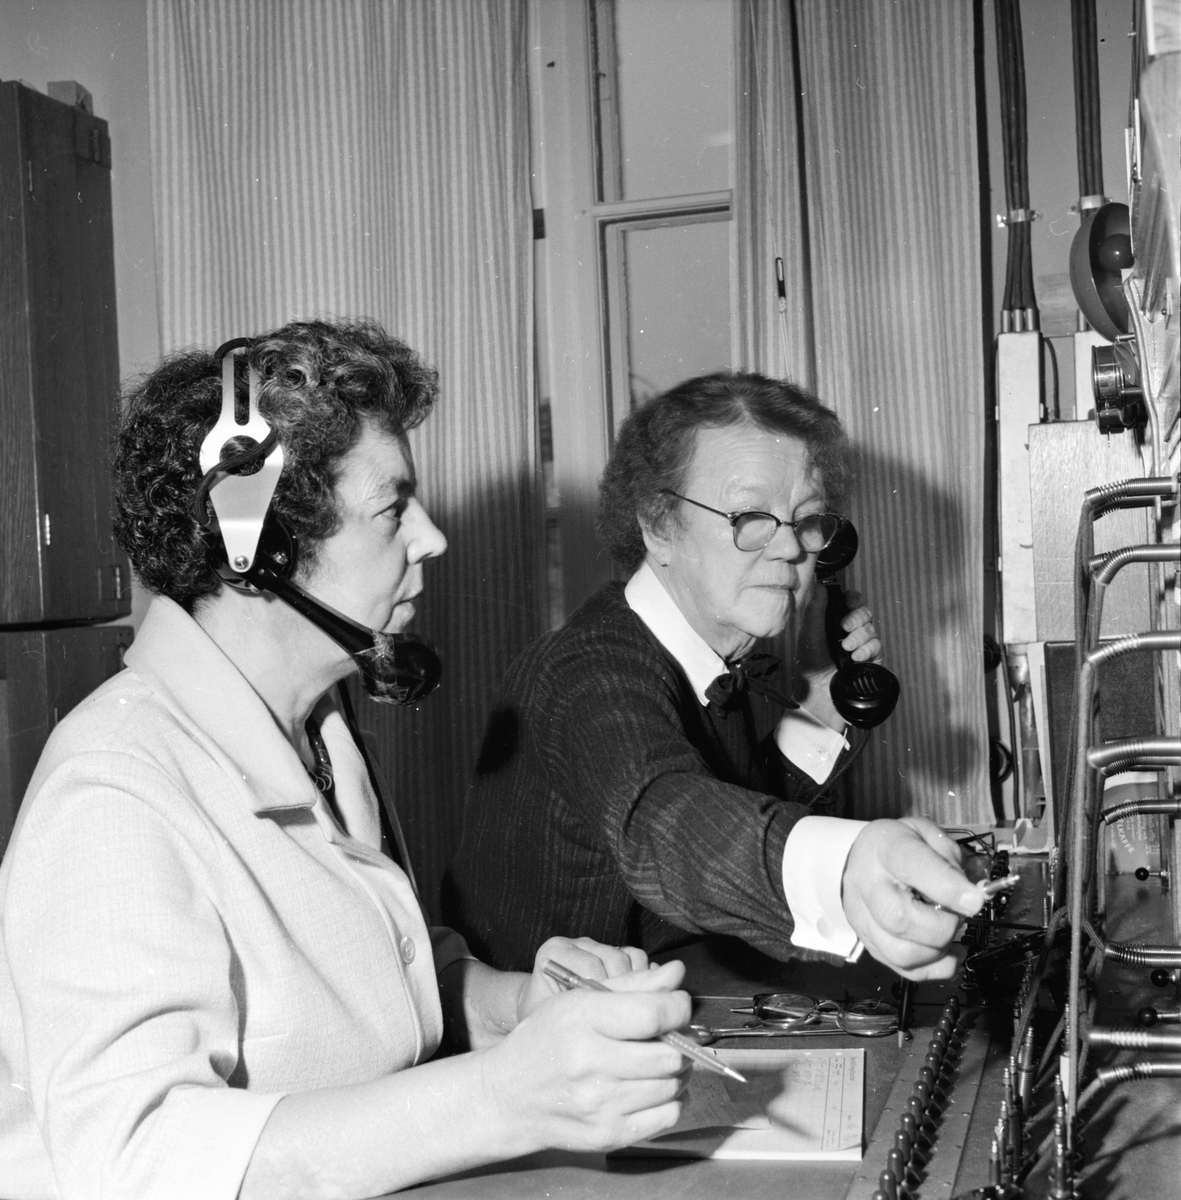 Telestation automatiseras
Lingbo 29/11 1961